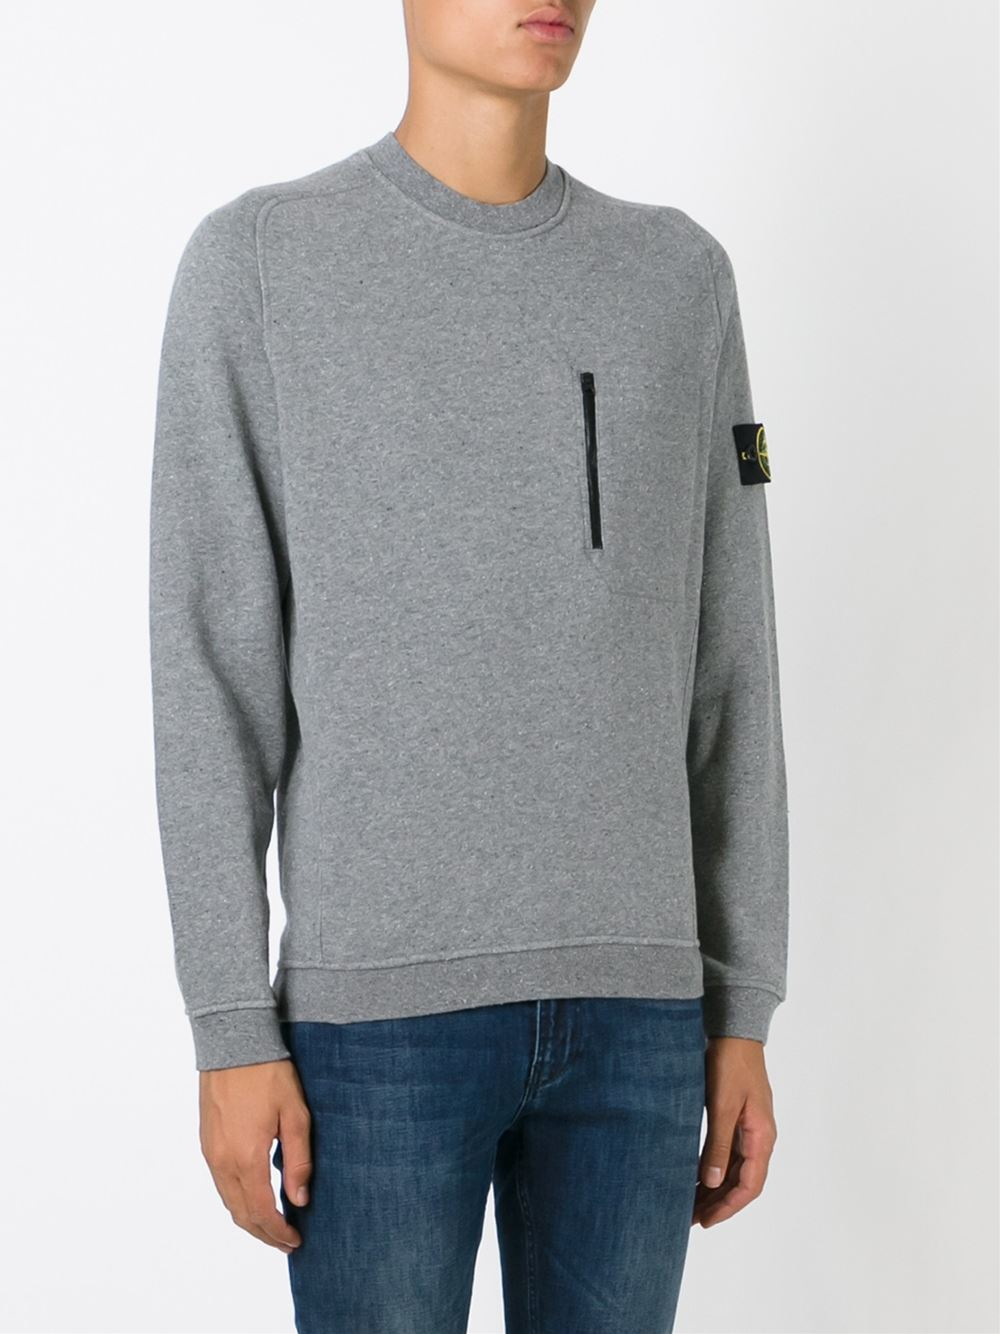 Stone Island Zip Chest Pocket Sweatshirt in Gray for Men - Lyst